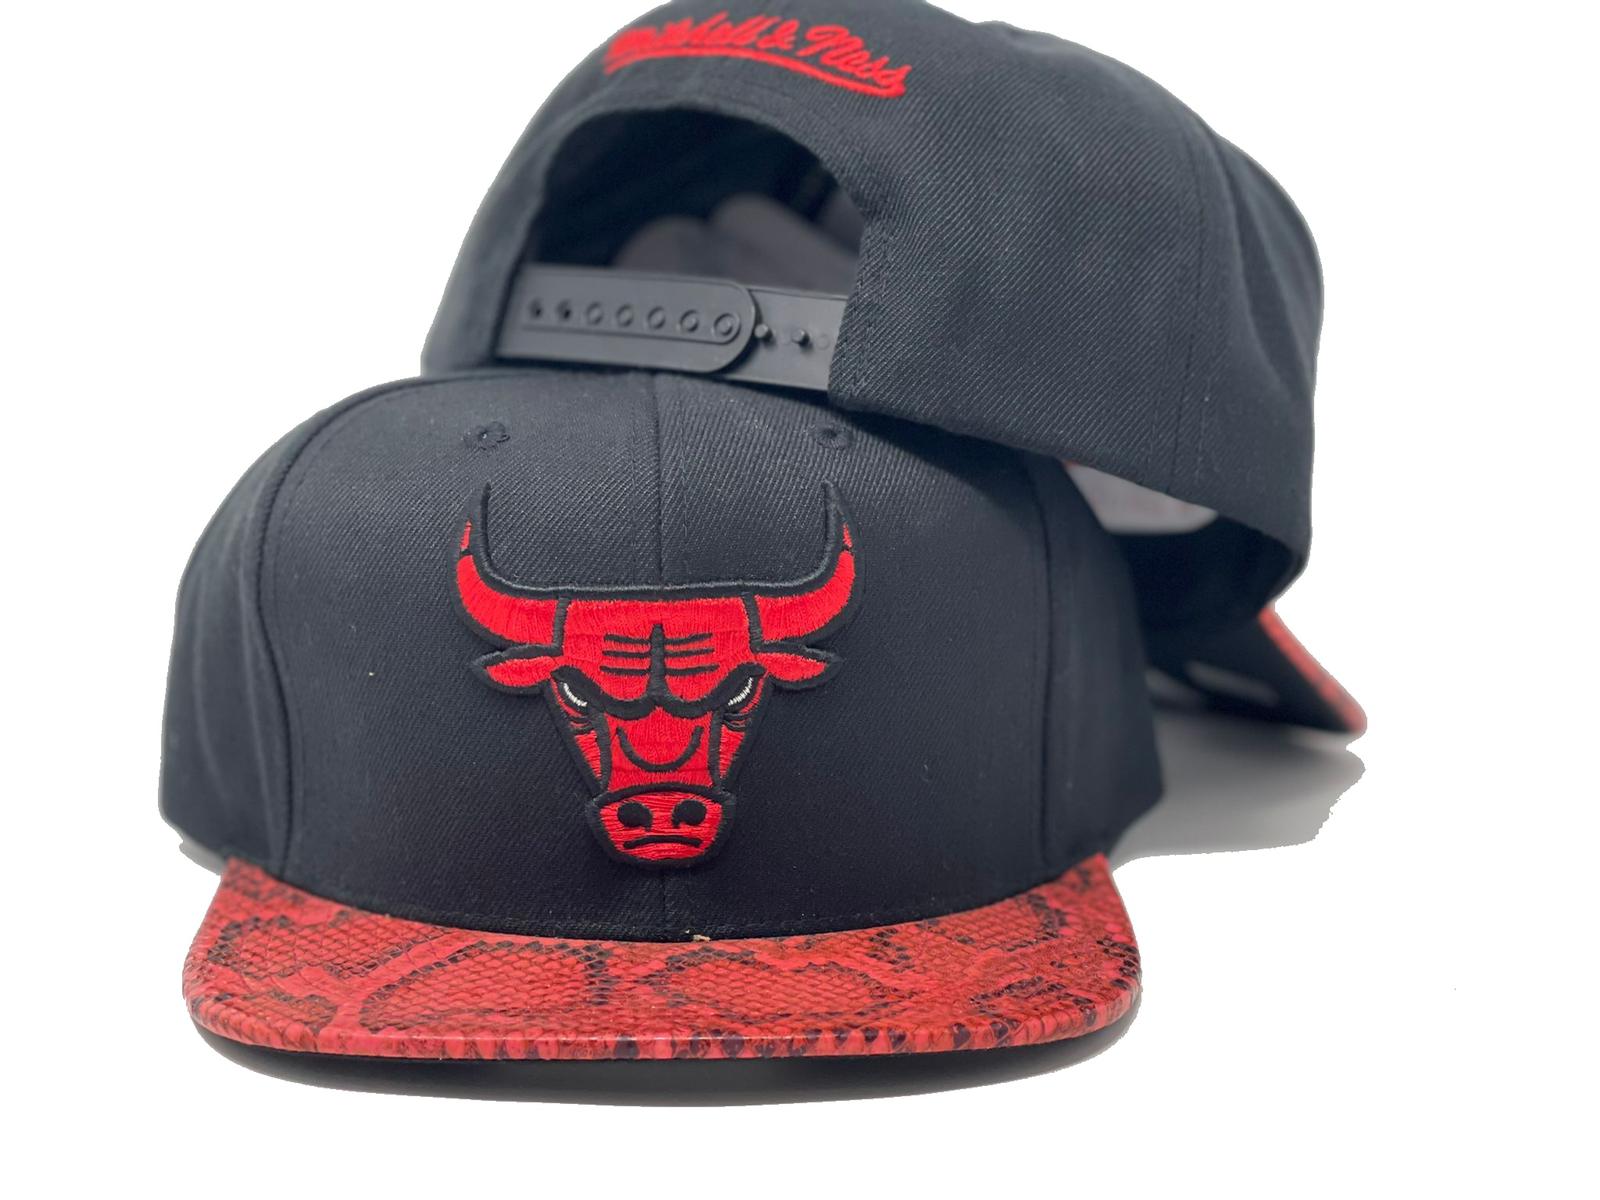 Mitchell & Ness, Accessories, Custom Chicago Bulls Hat